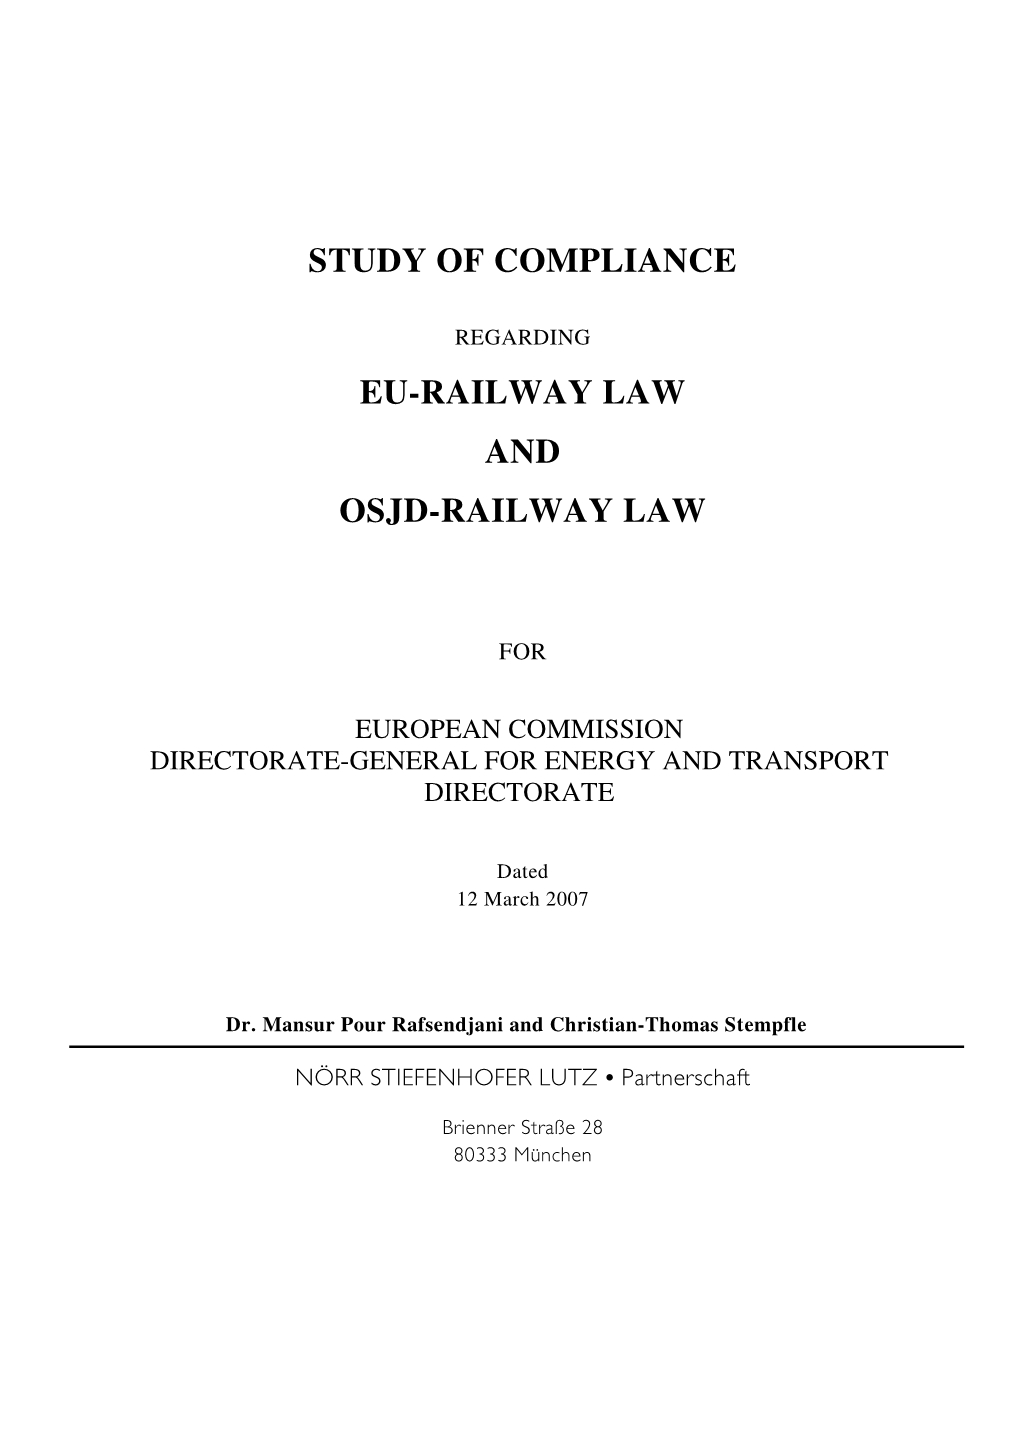 Osjd-Railway Law